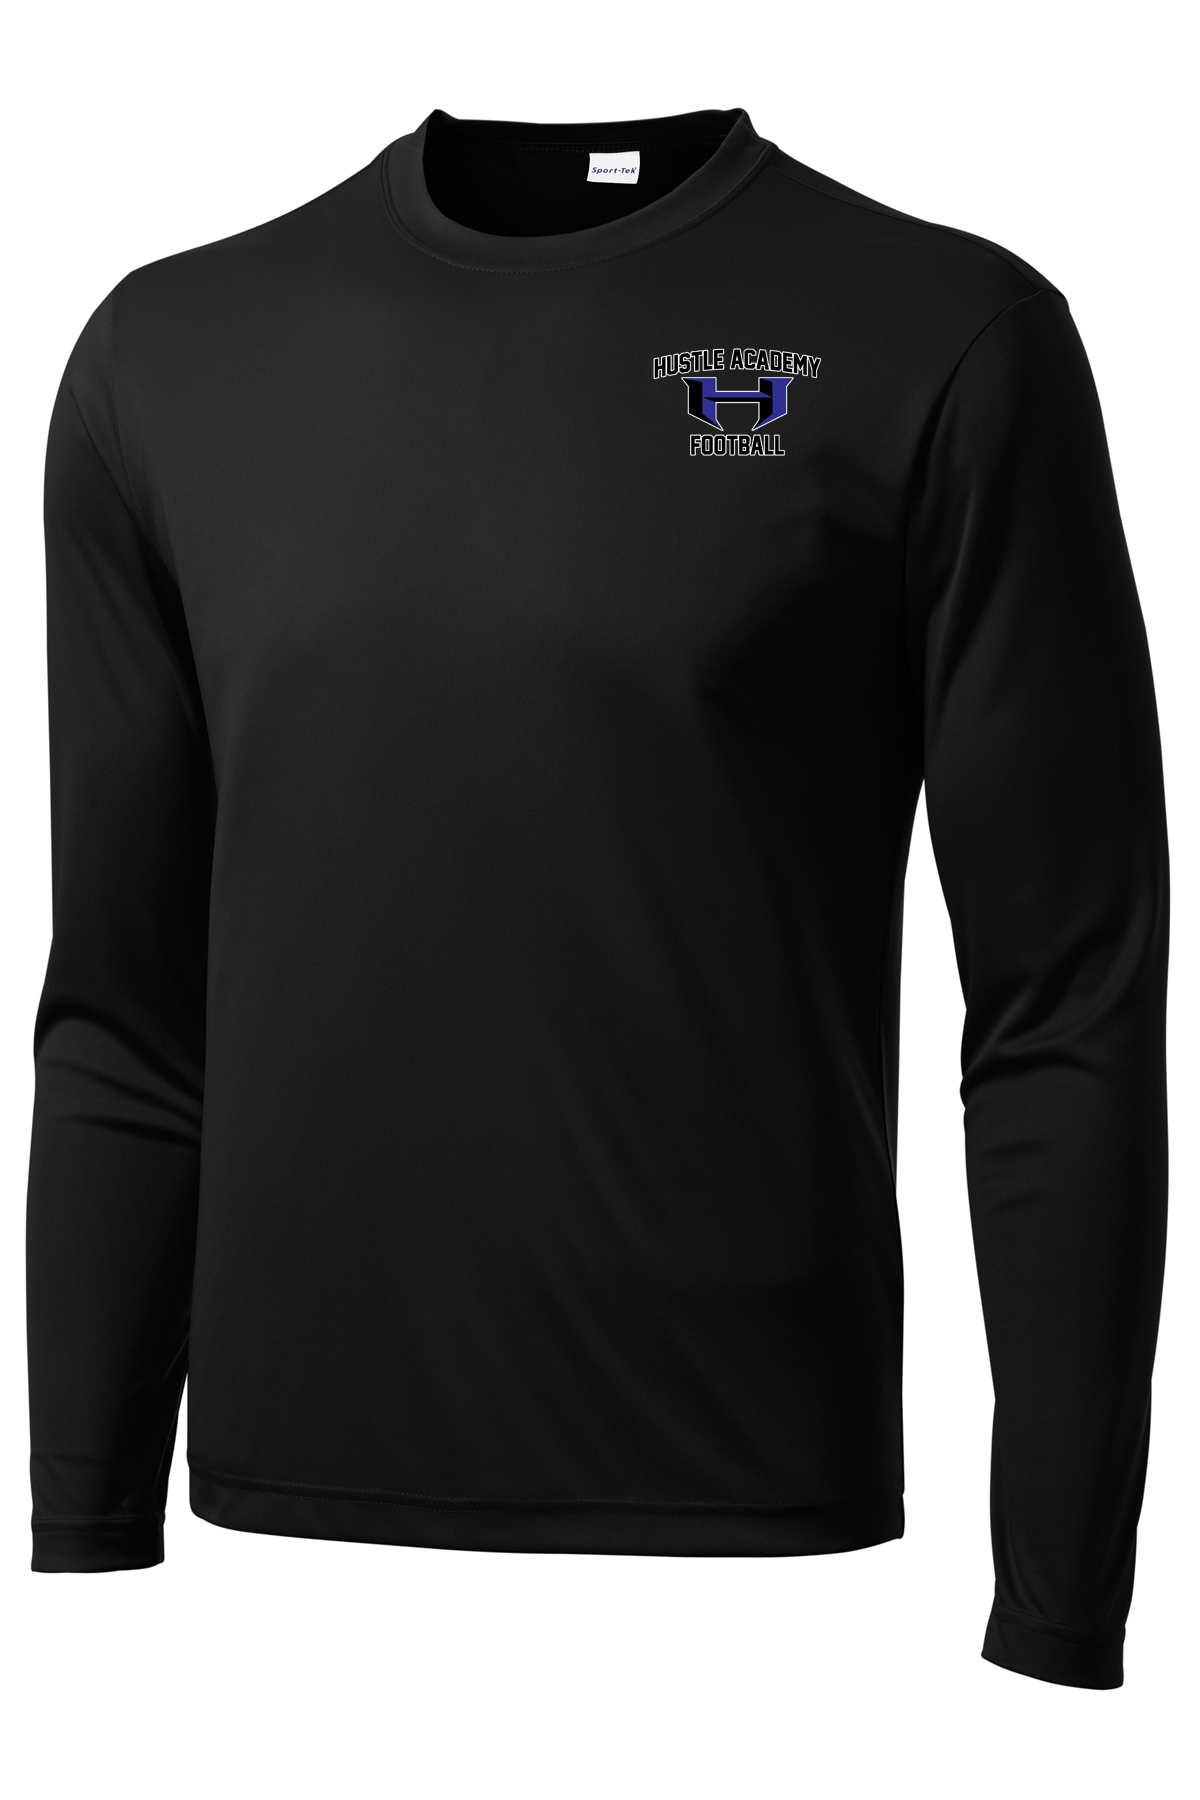 Hustle Academy Football Long Sleeve Performance Shirt